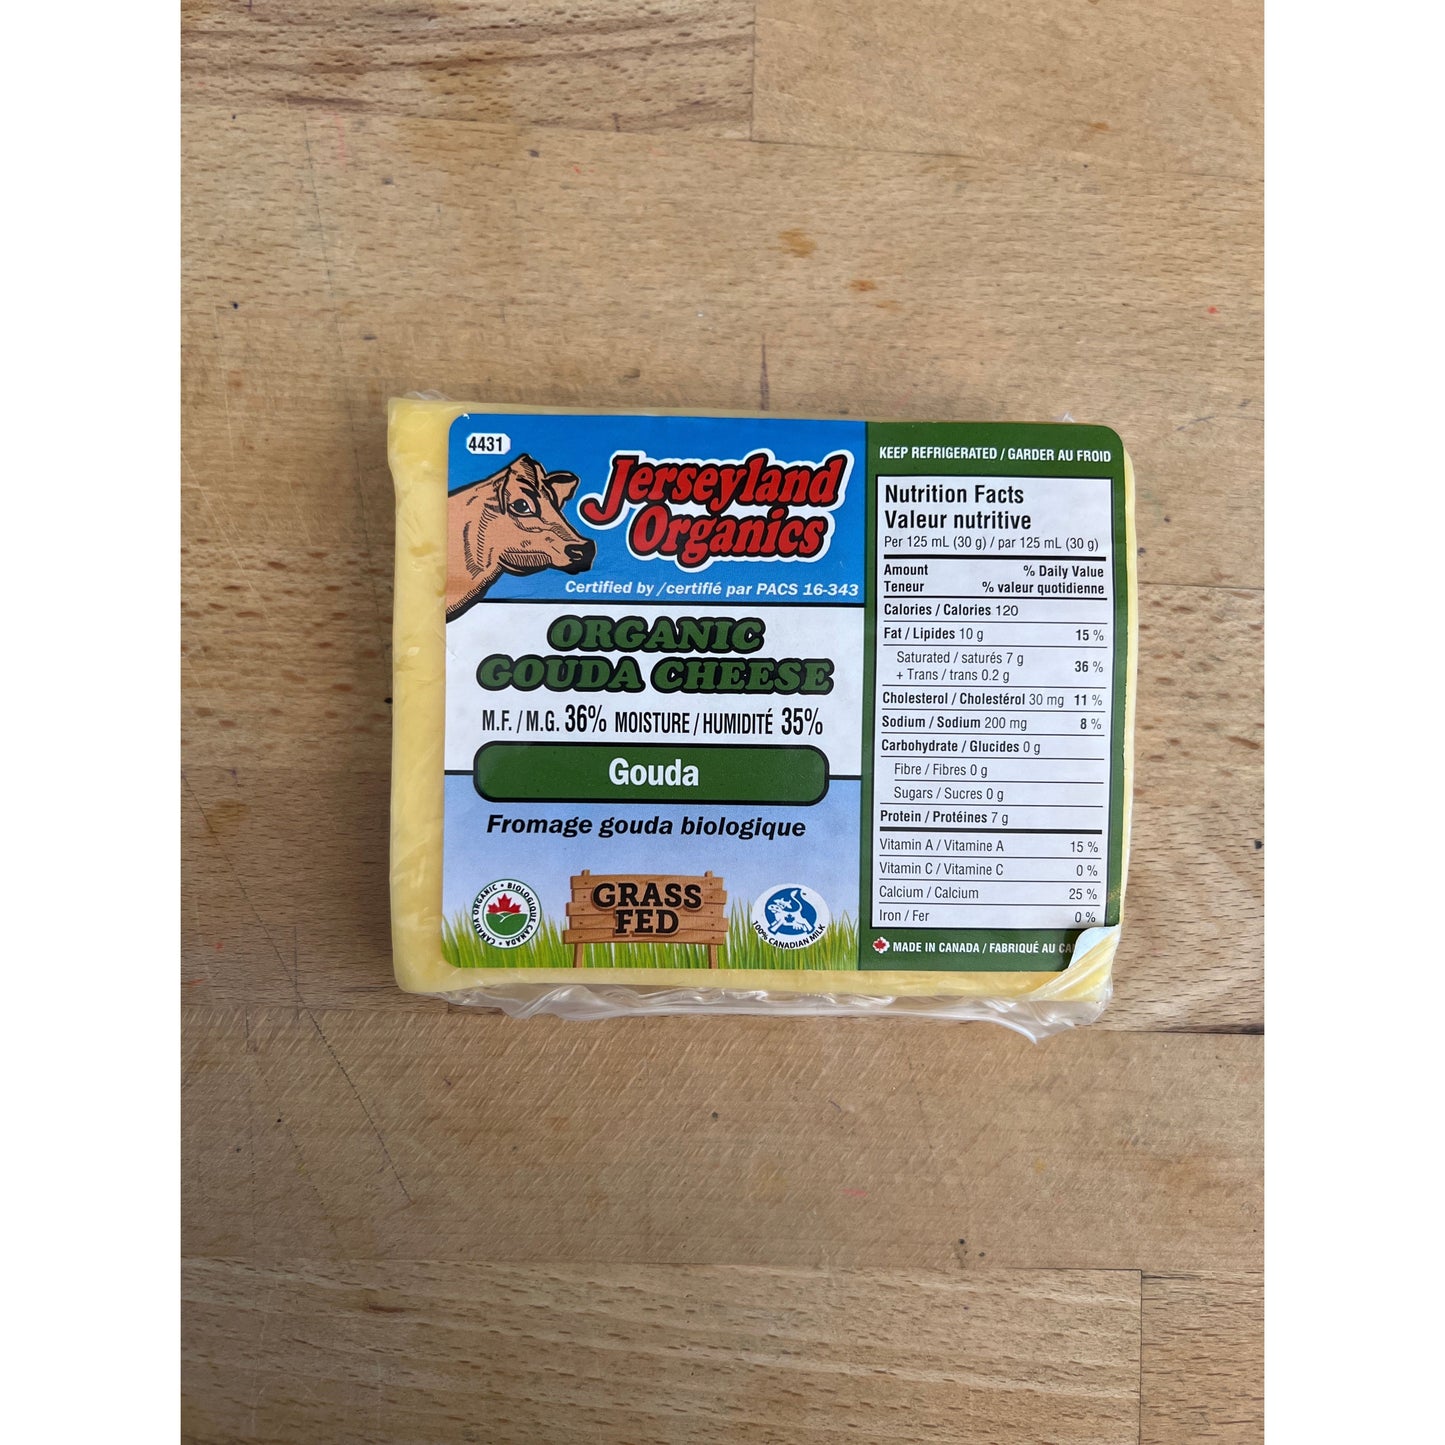 (Jerseyland Organics) - Raw Milk Organic Grass-Fed Gouda Cheese + Canada Postage